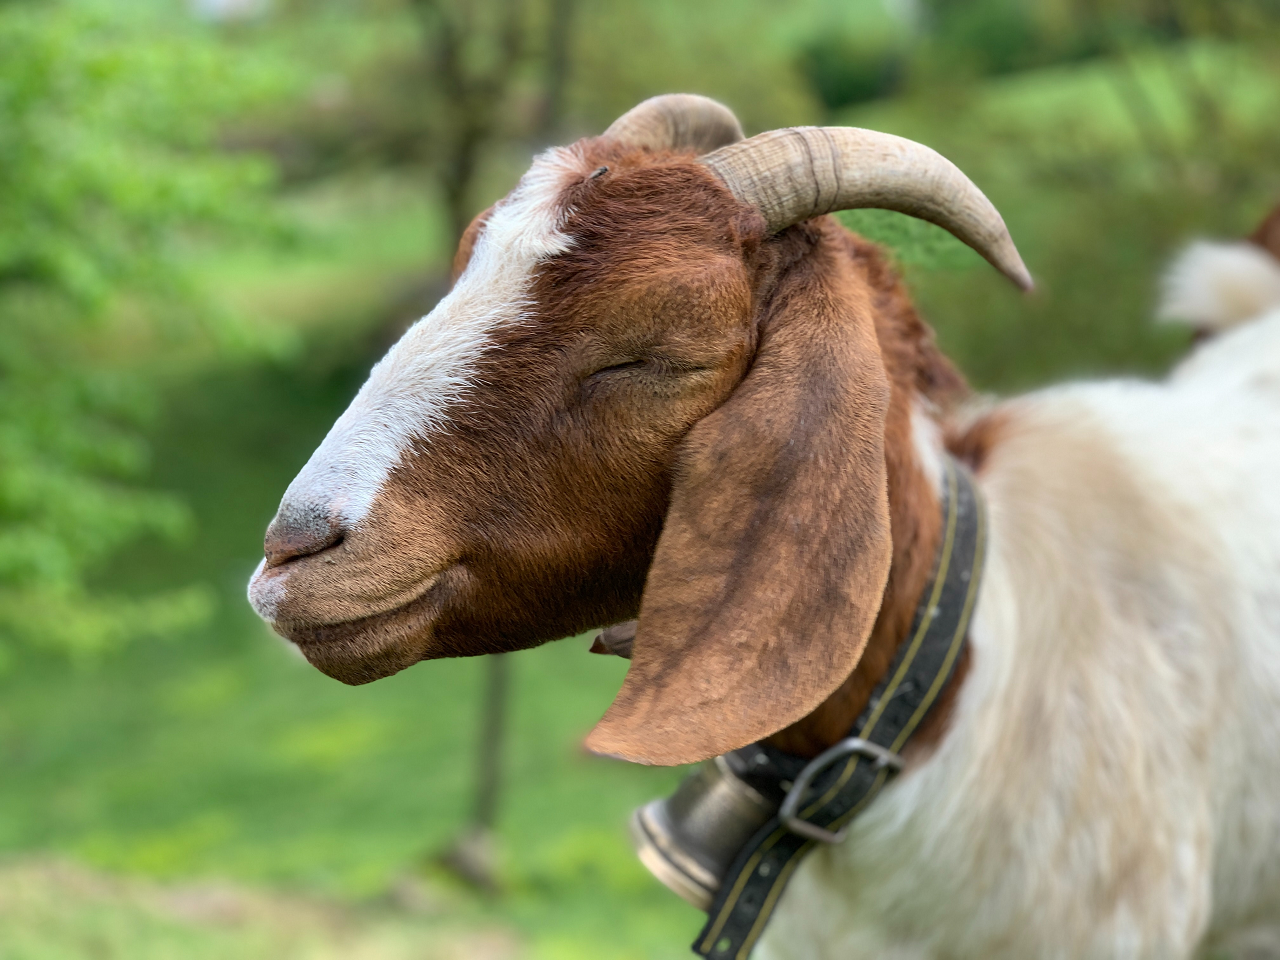 Image of a Boer goat.